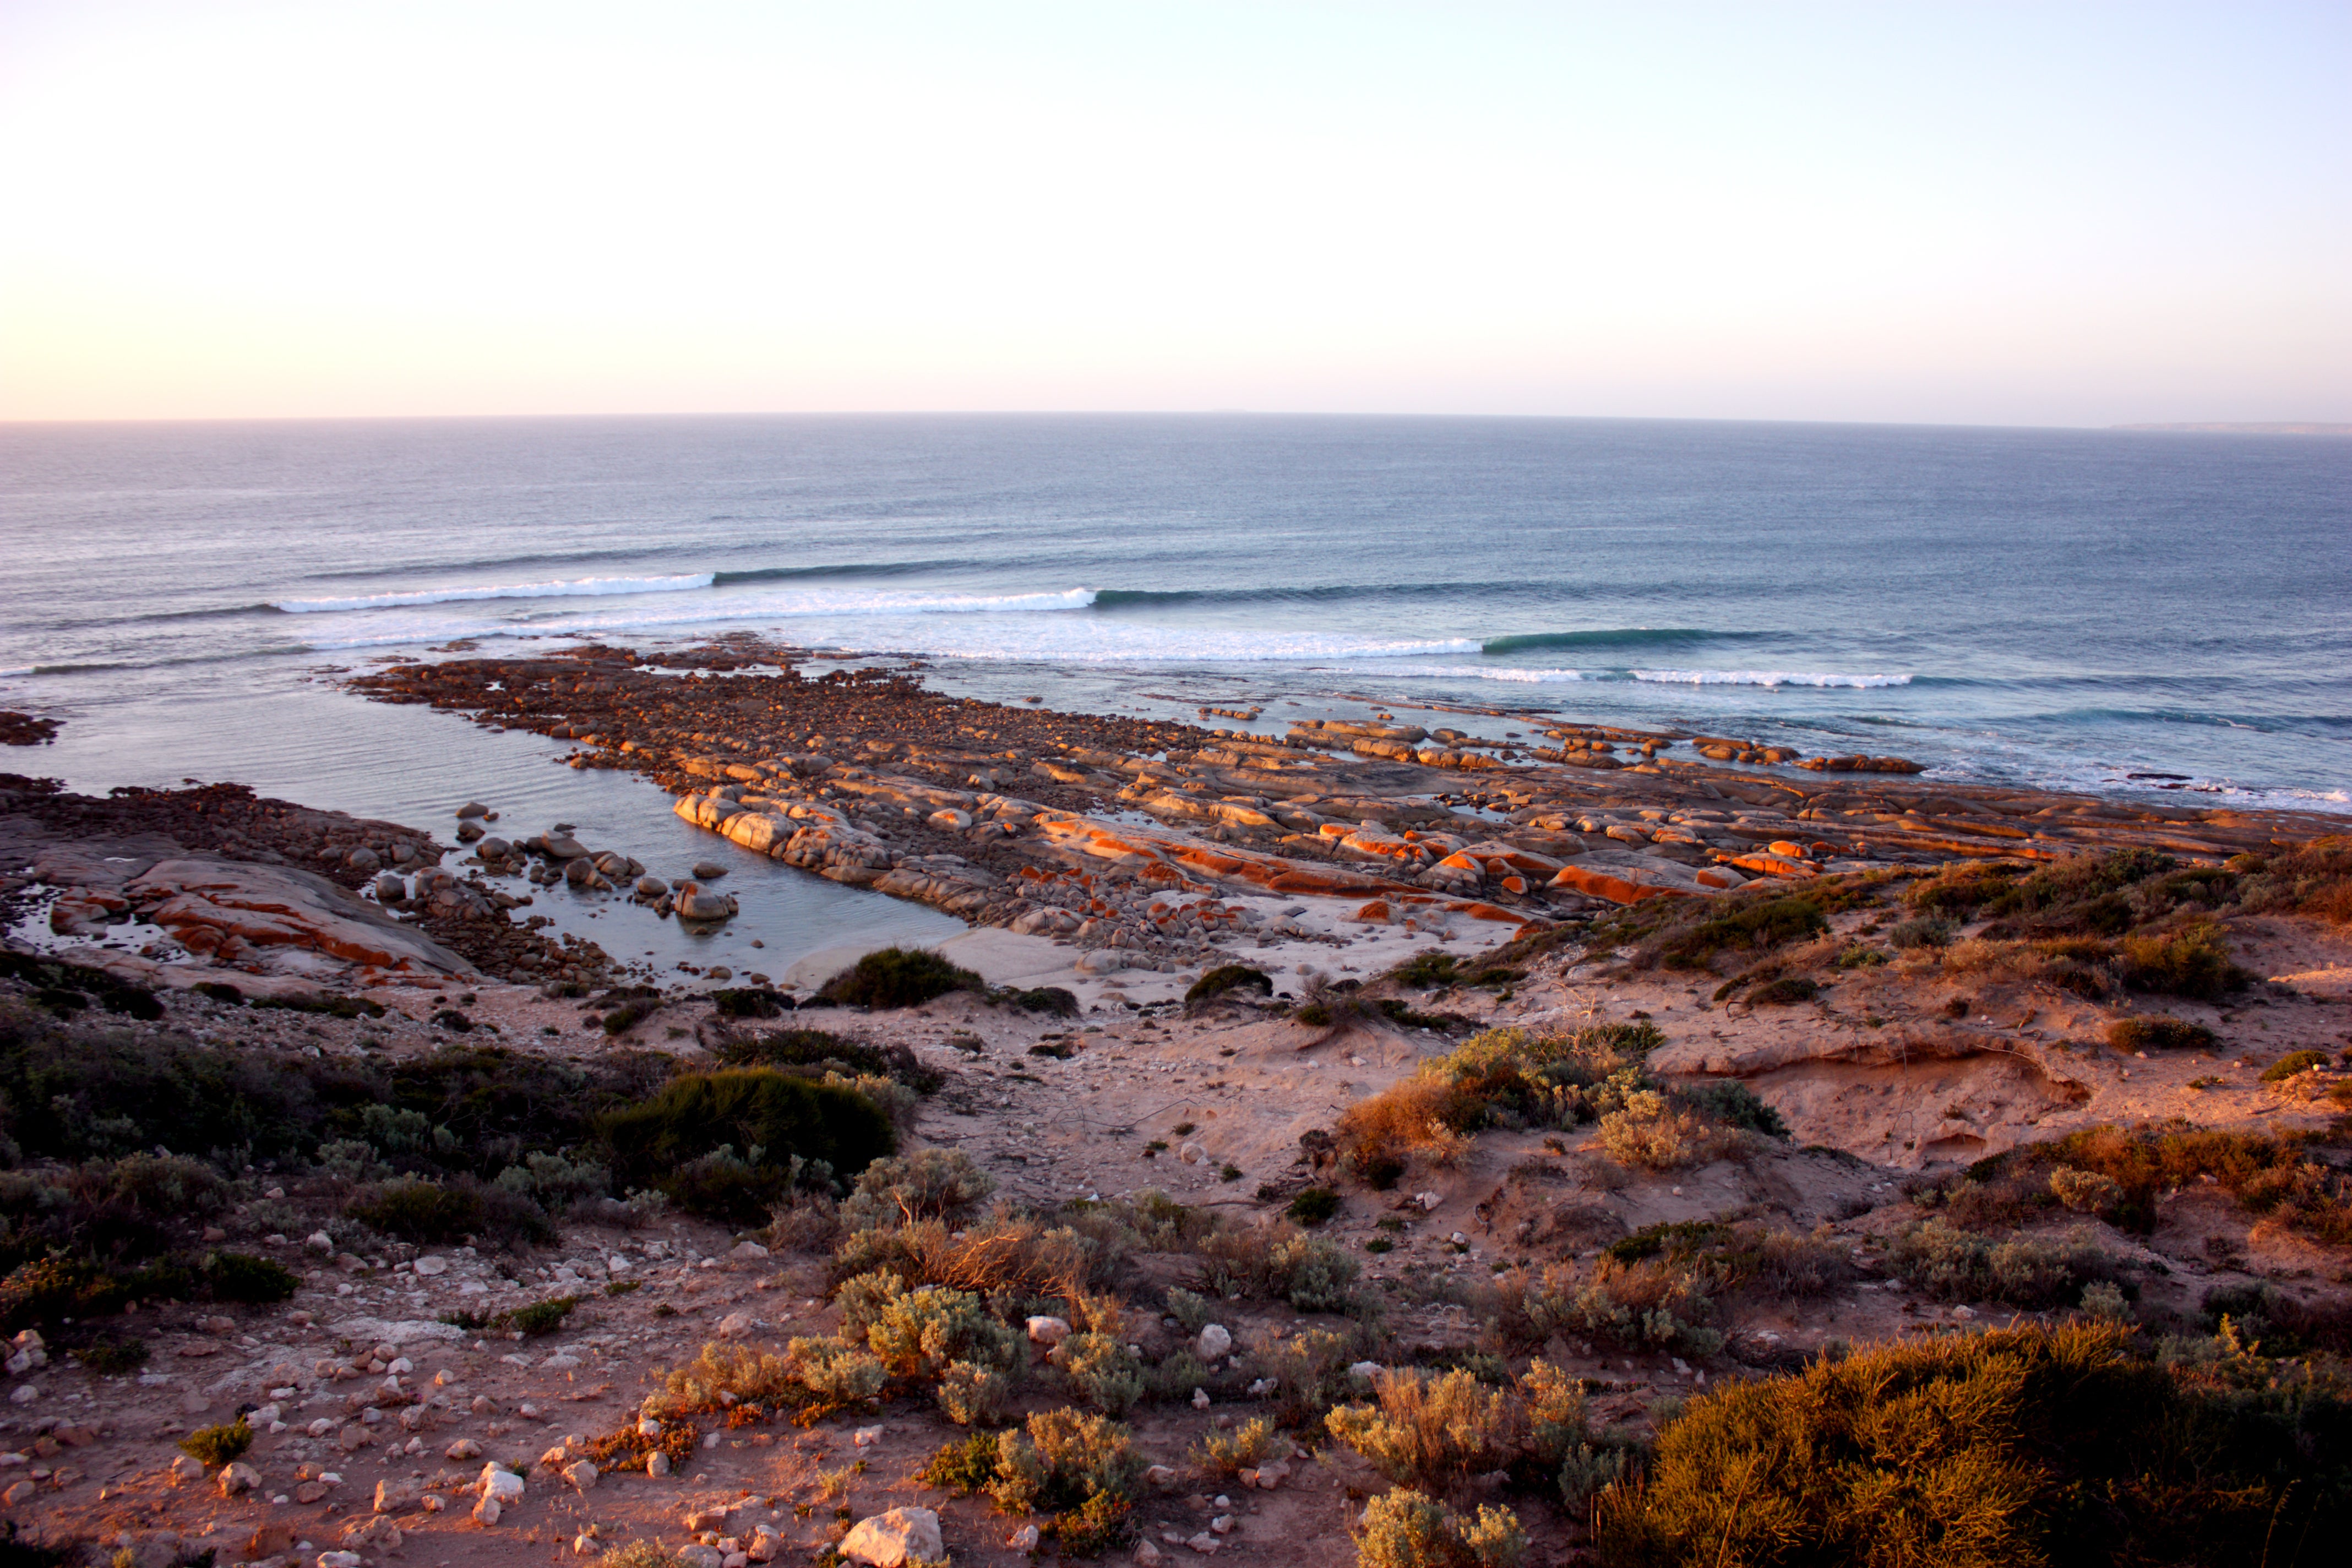 File photo: A beach in South Australia’s Eyre Peninsula